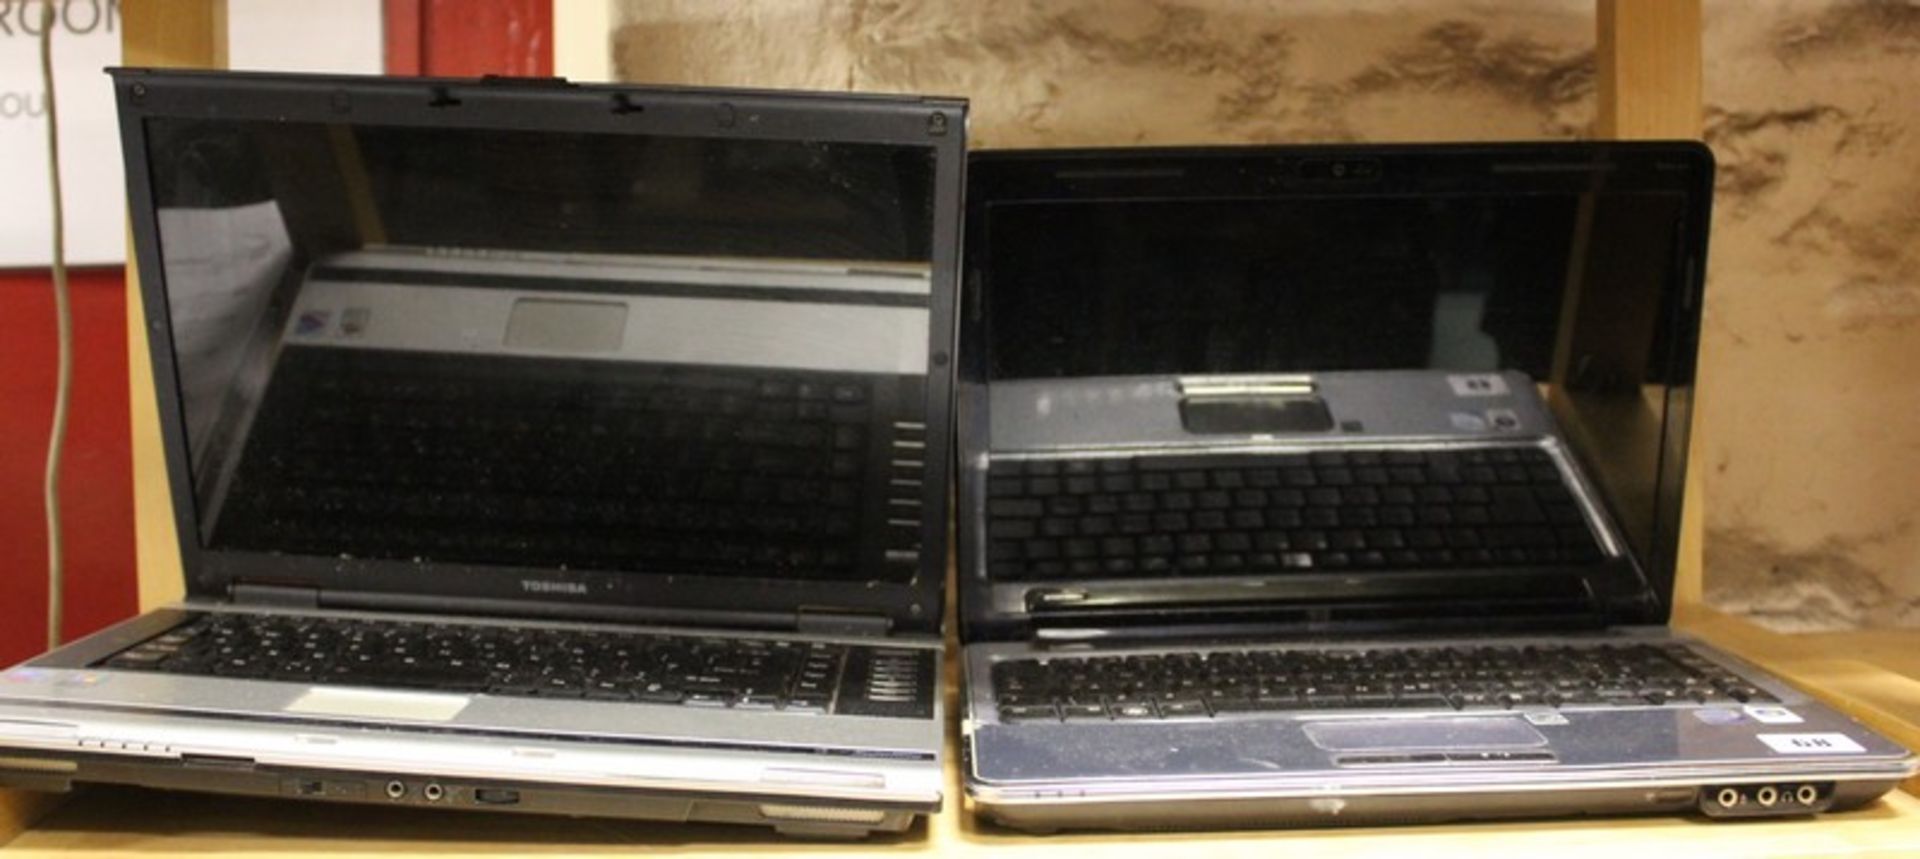 A Toshiba Satellite M70-267 laptop (Hard drive removed) and an HP Pavilion dv4 laptop (Hard drive